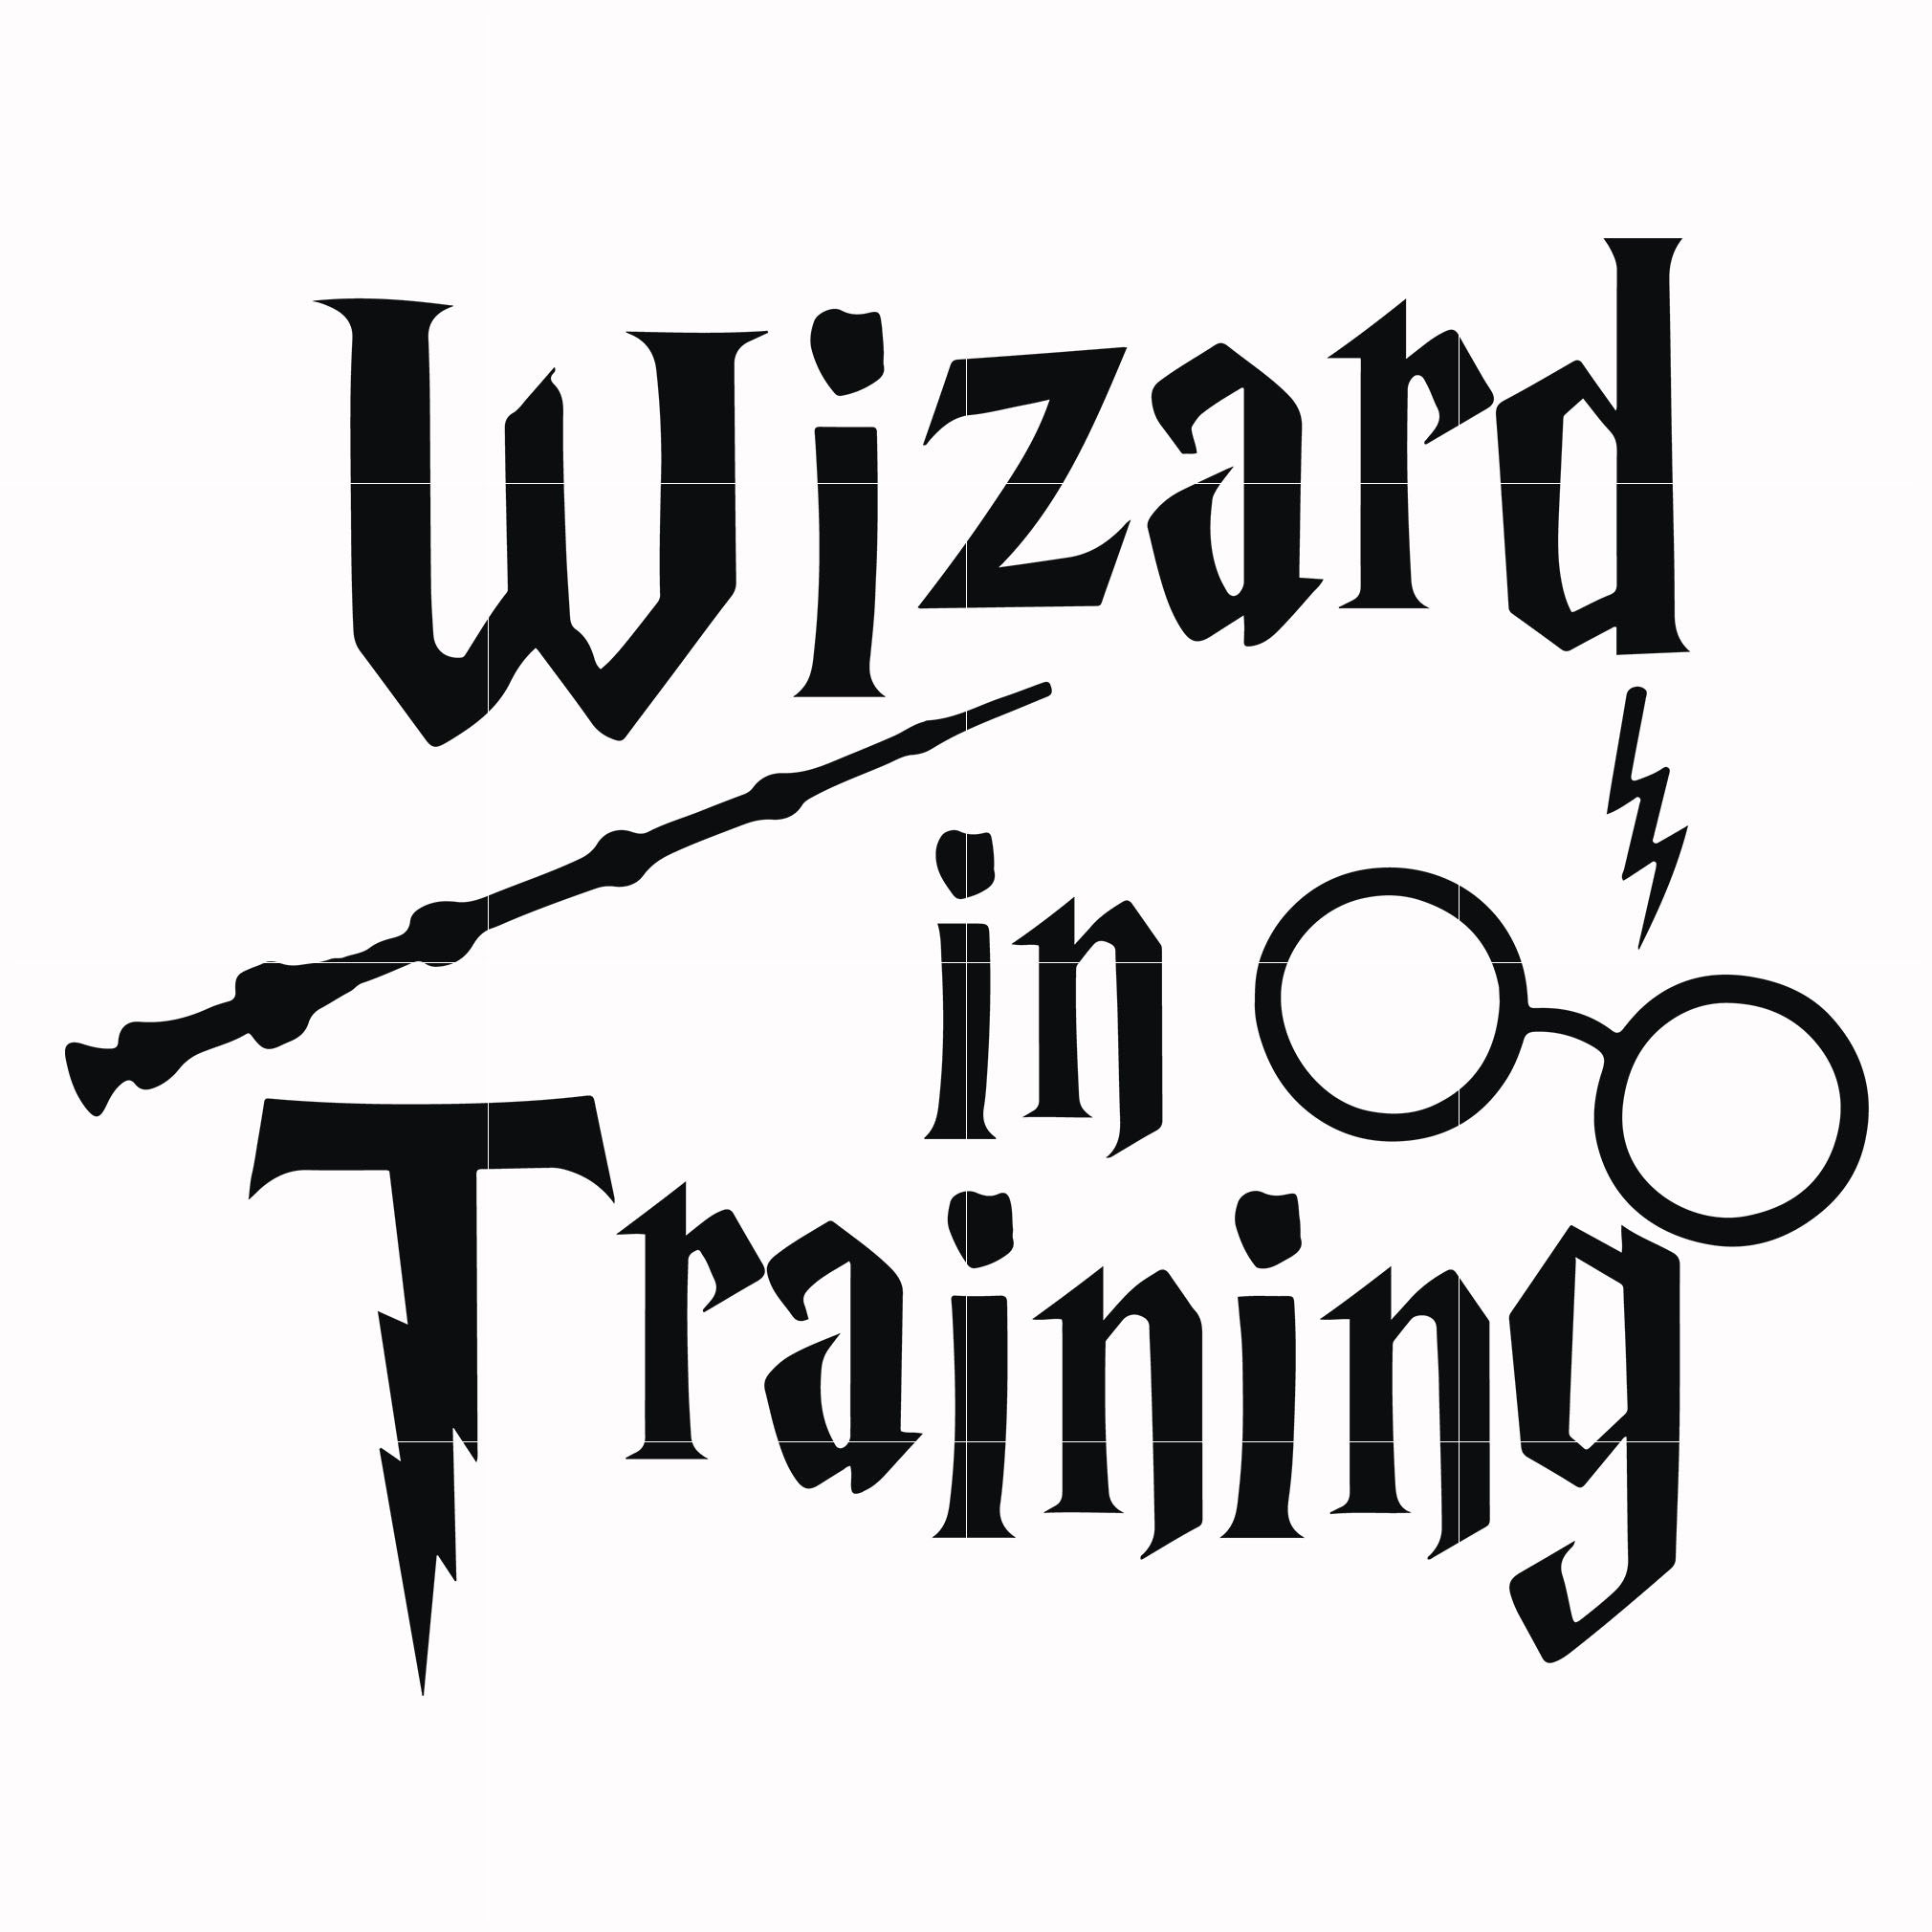 Harry Potter Svg Free - Free SVG Cut Files